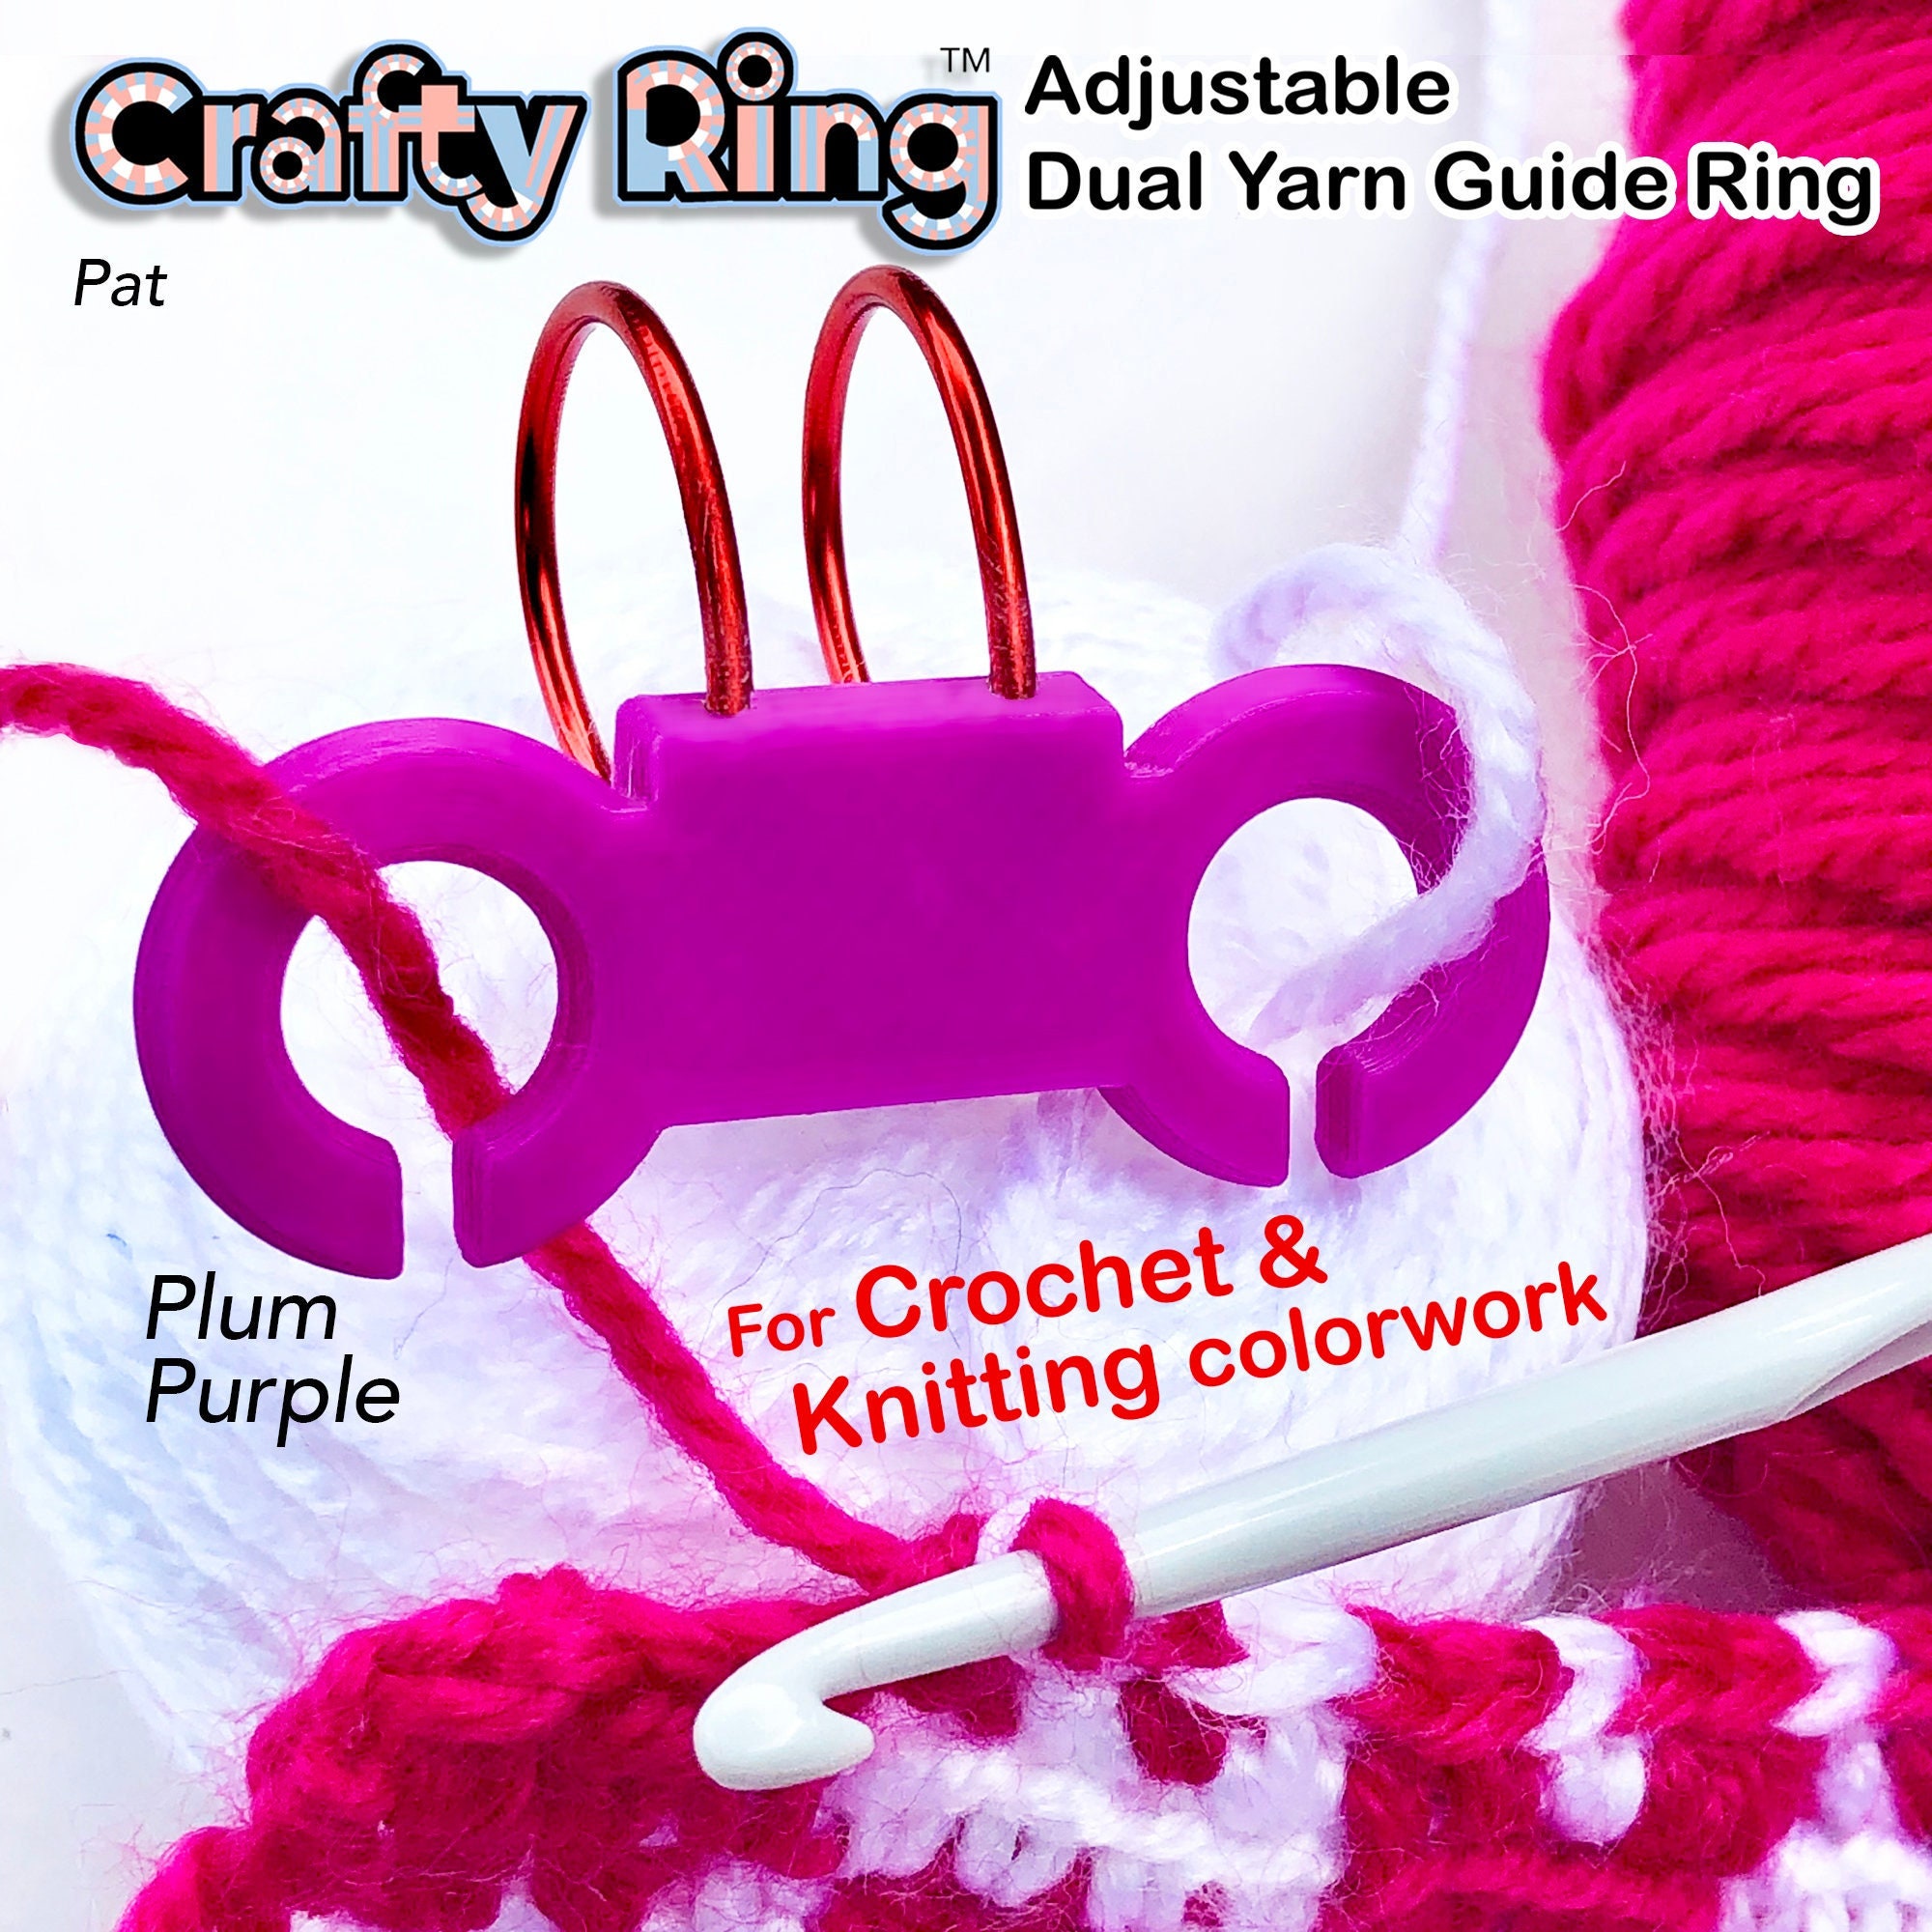 Adjustable Knitting Crochet Yarn Guide Ring